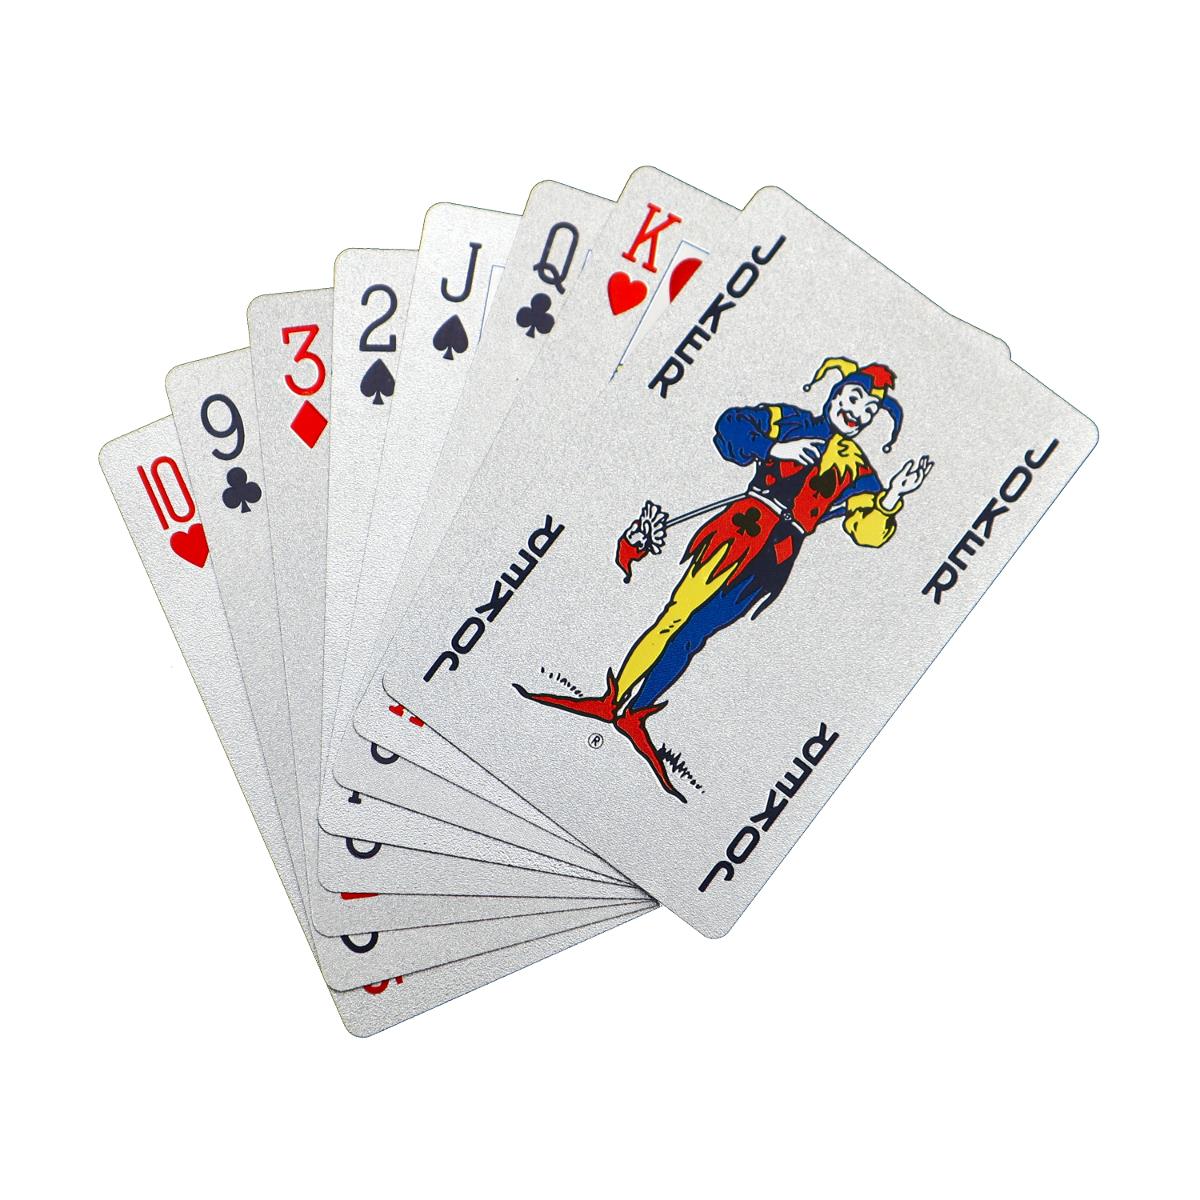 Classic Platinum Waddingtons Number 1 Playing Cards